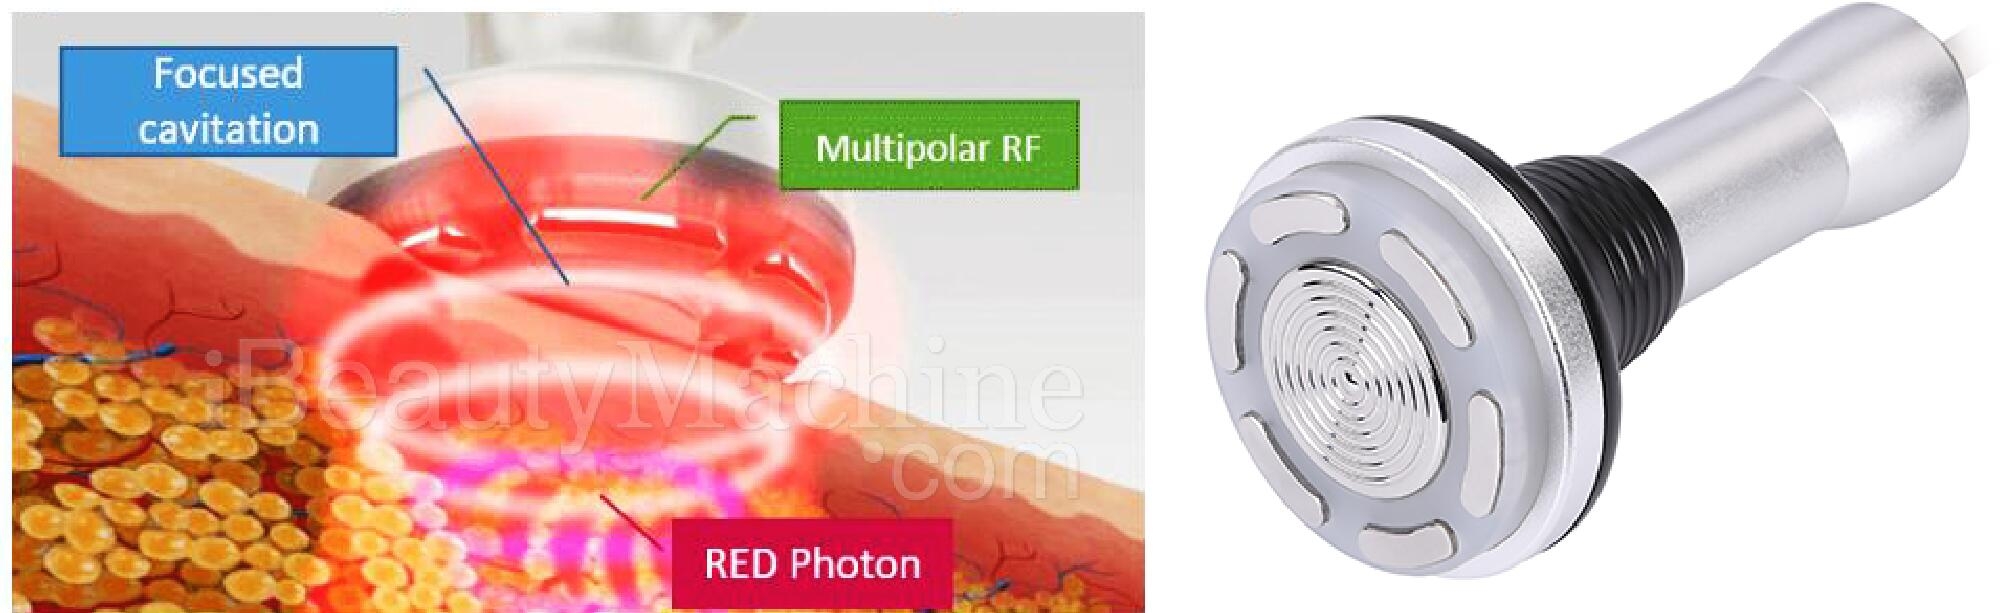 buy cavitation vacuum rf laser